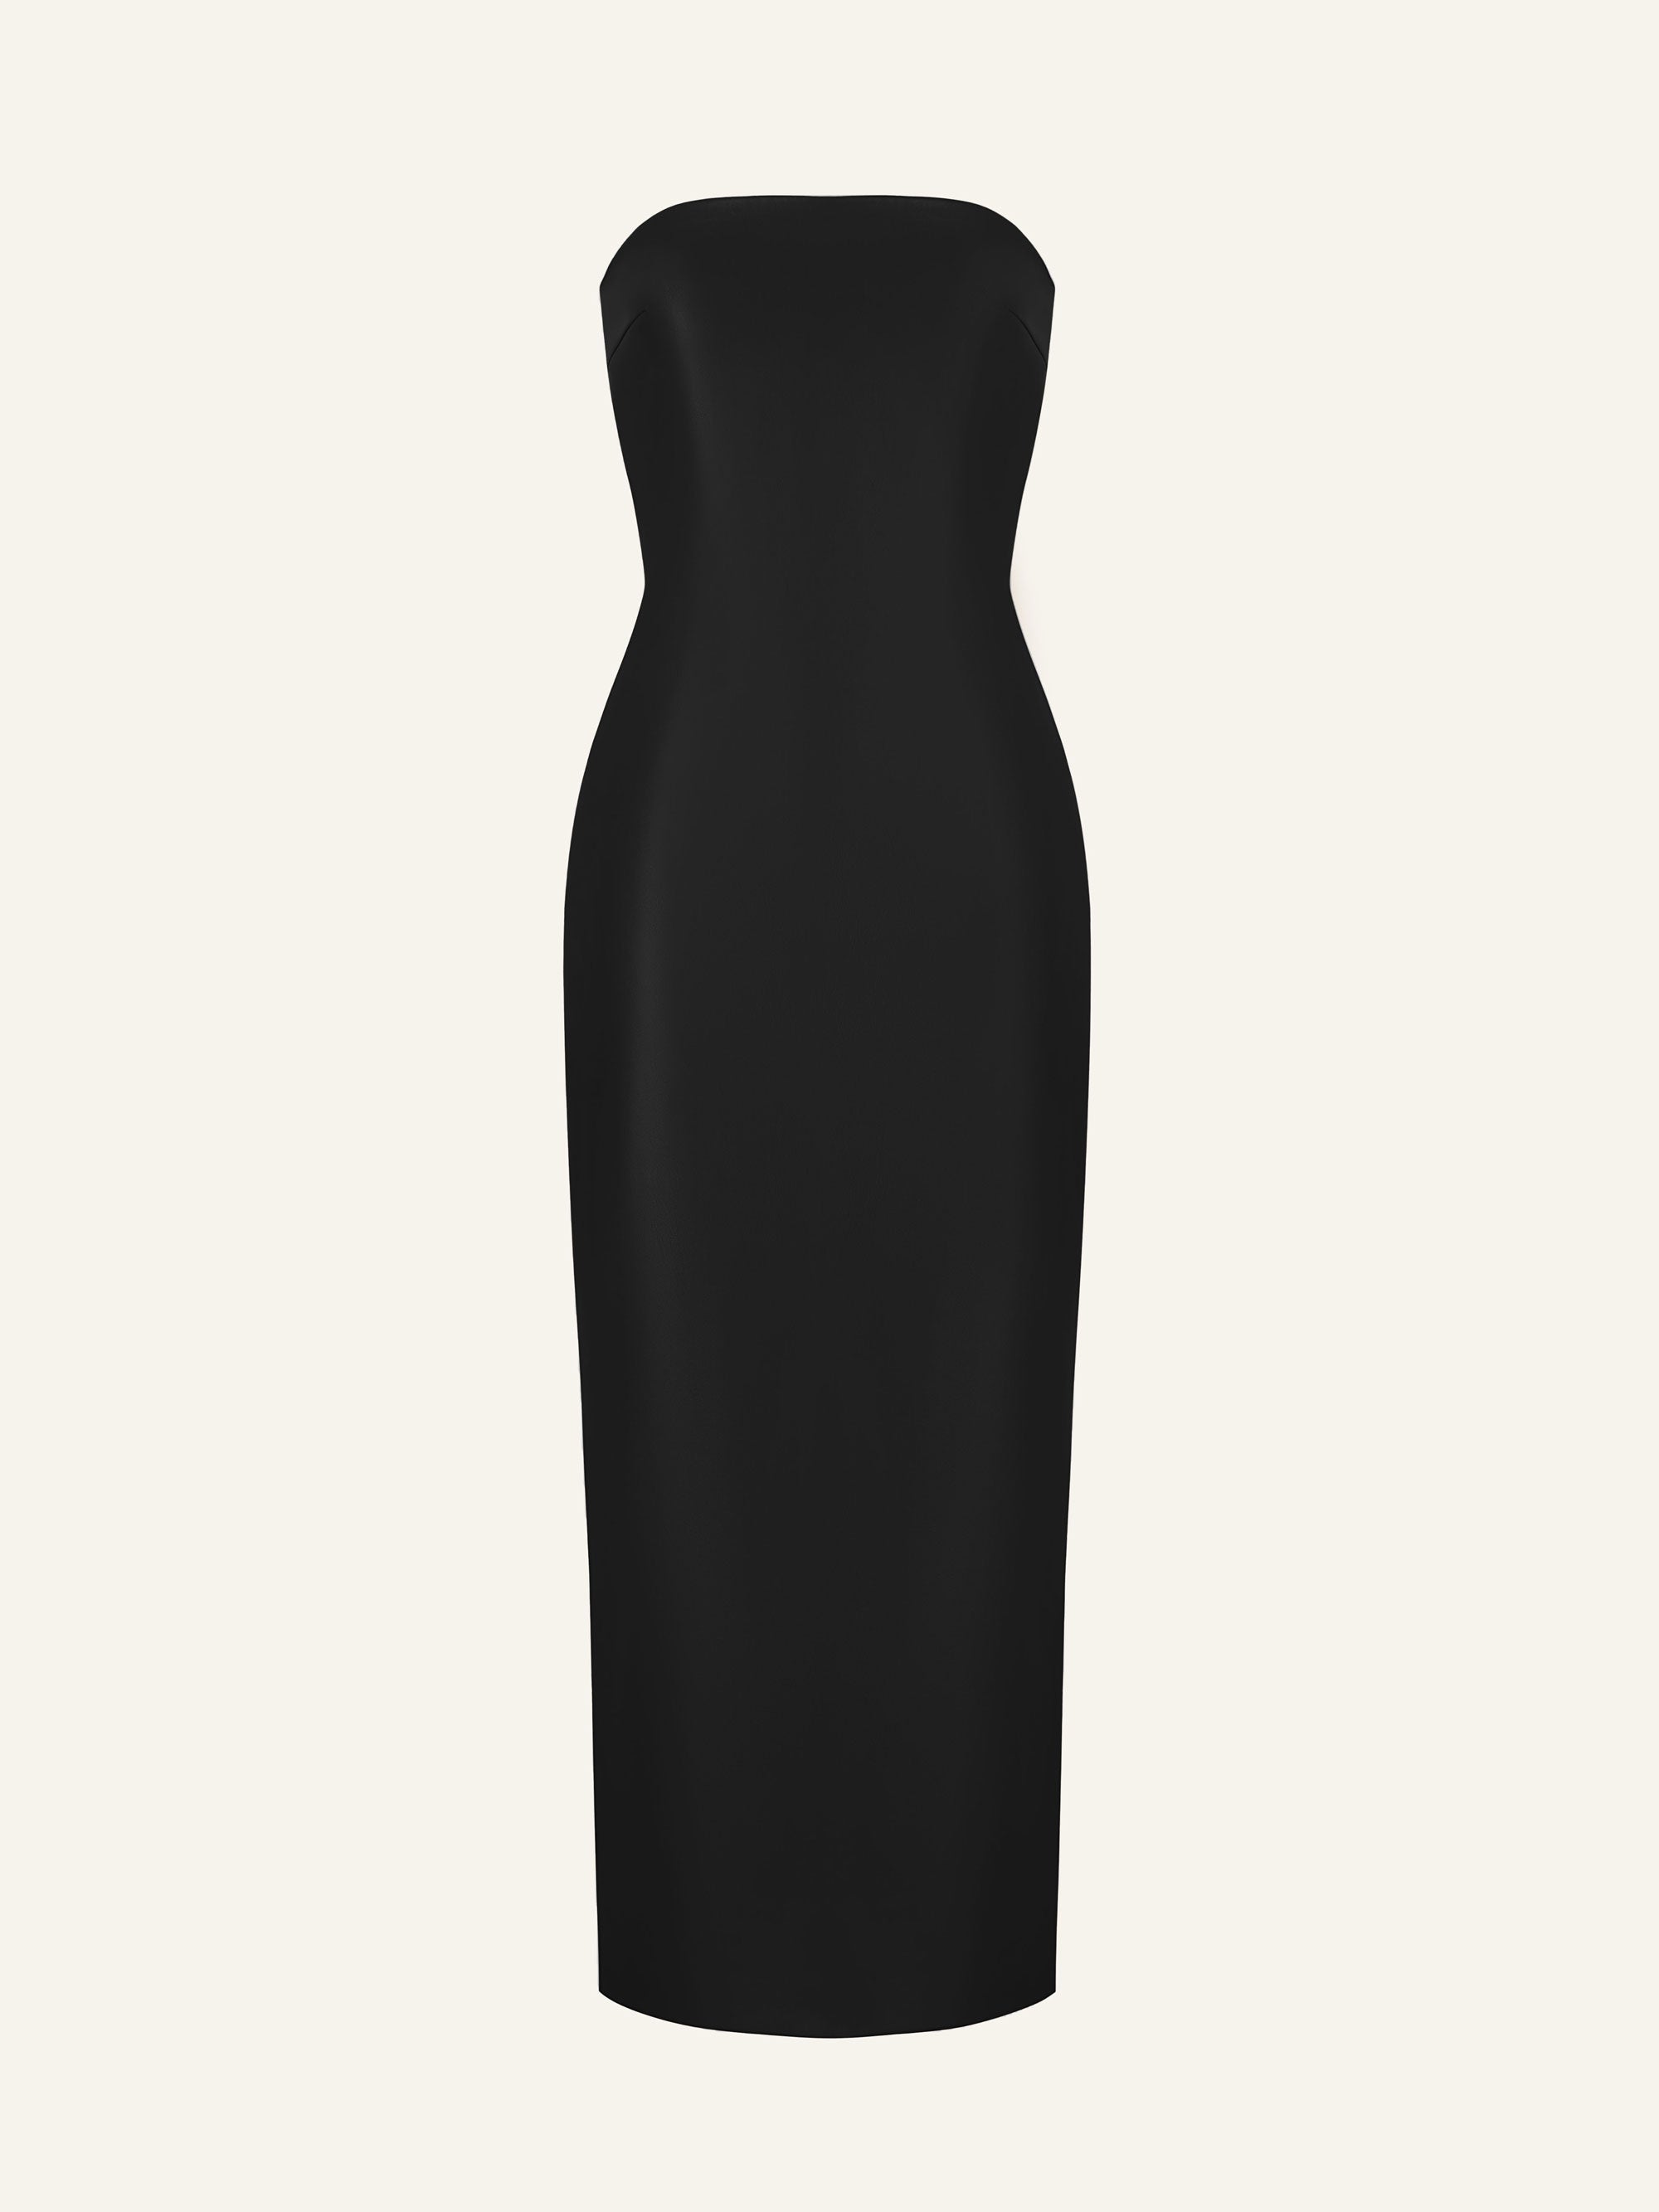 Product photo of a black vegan leather tube dress